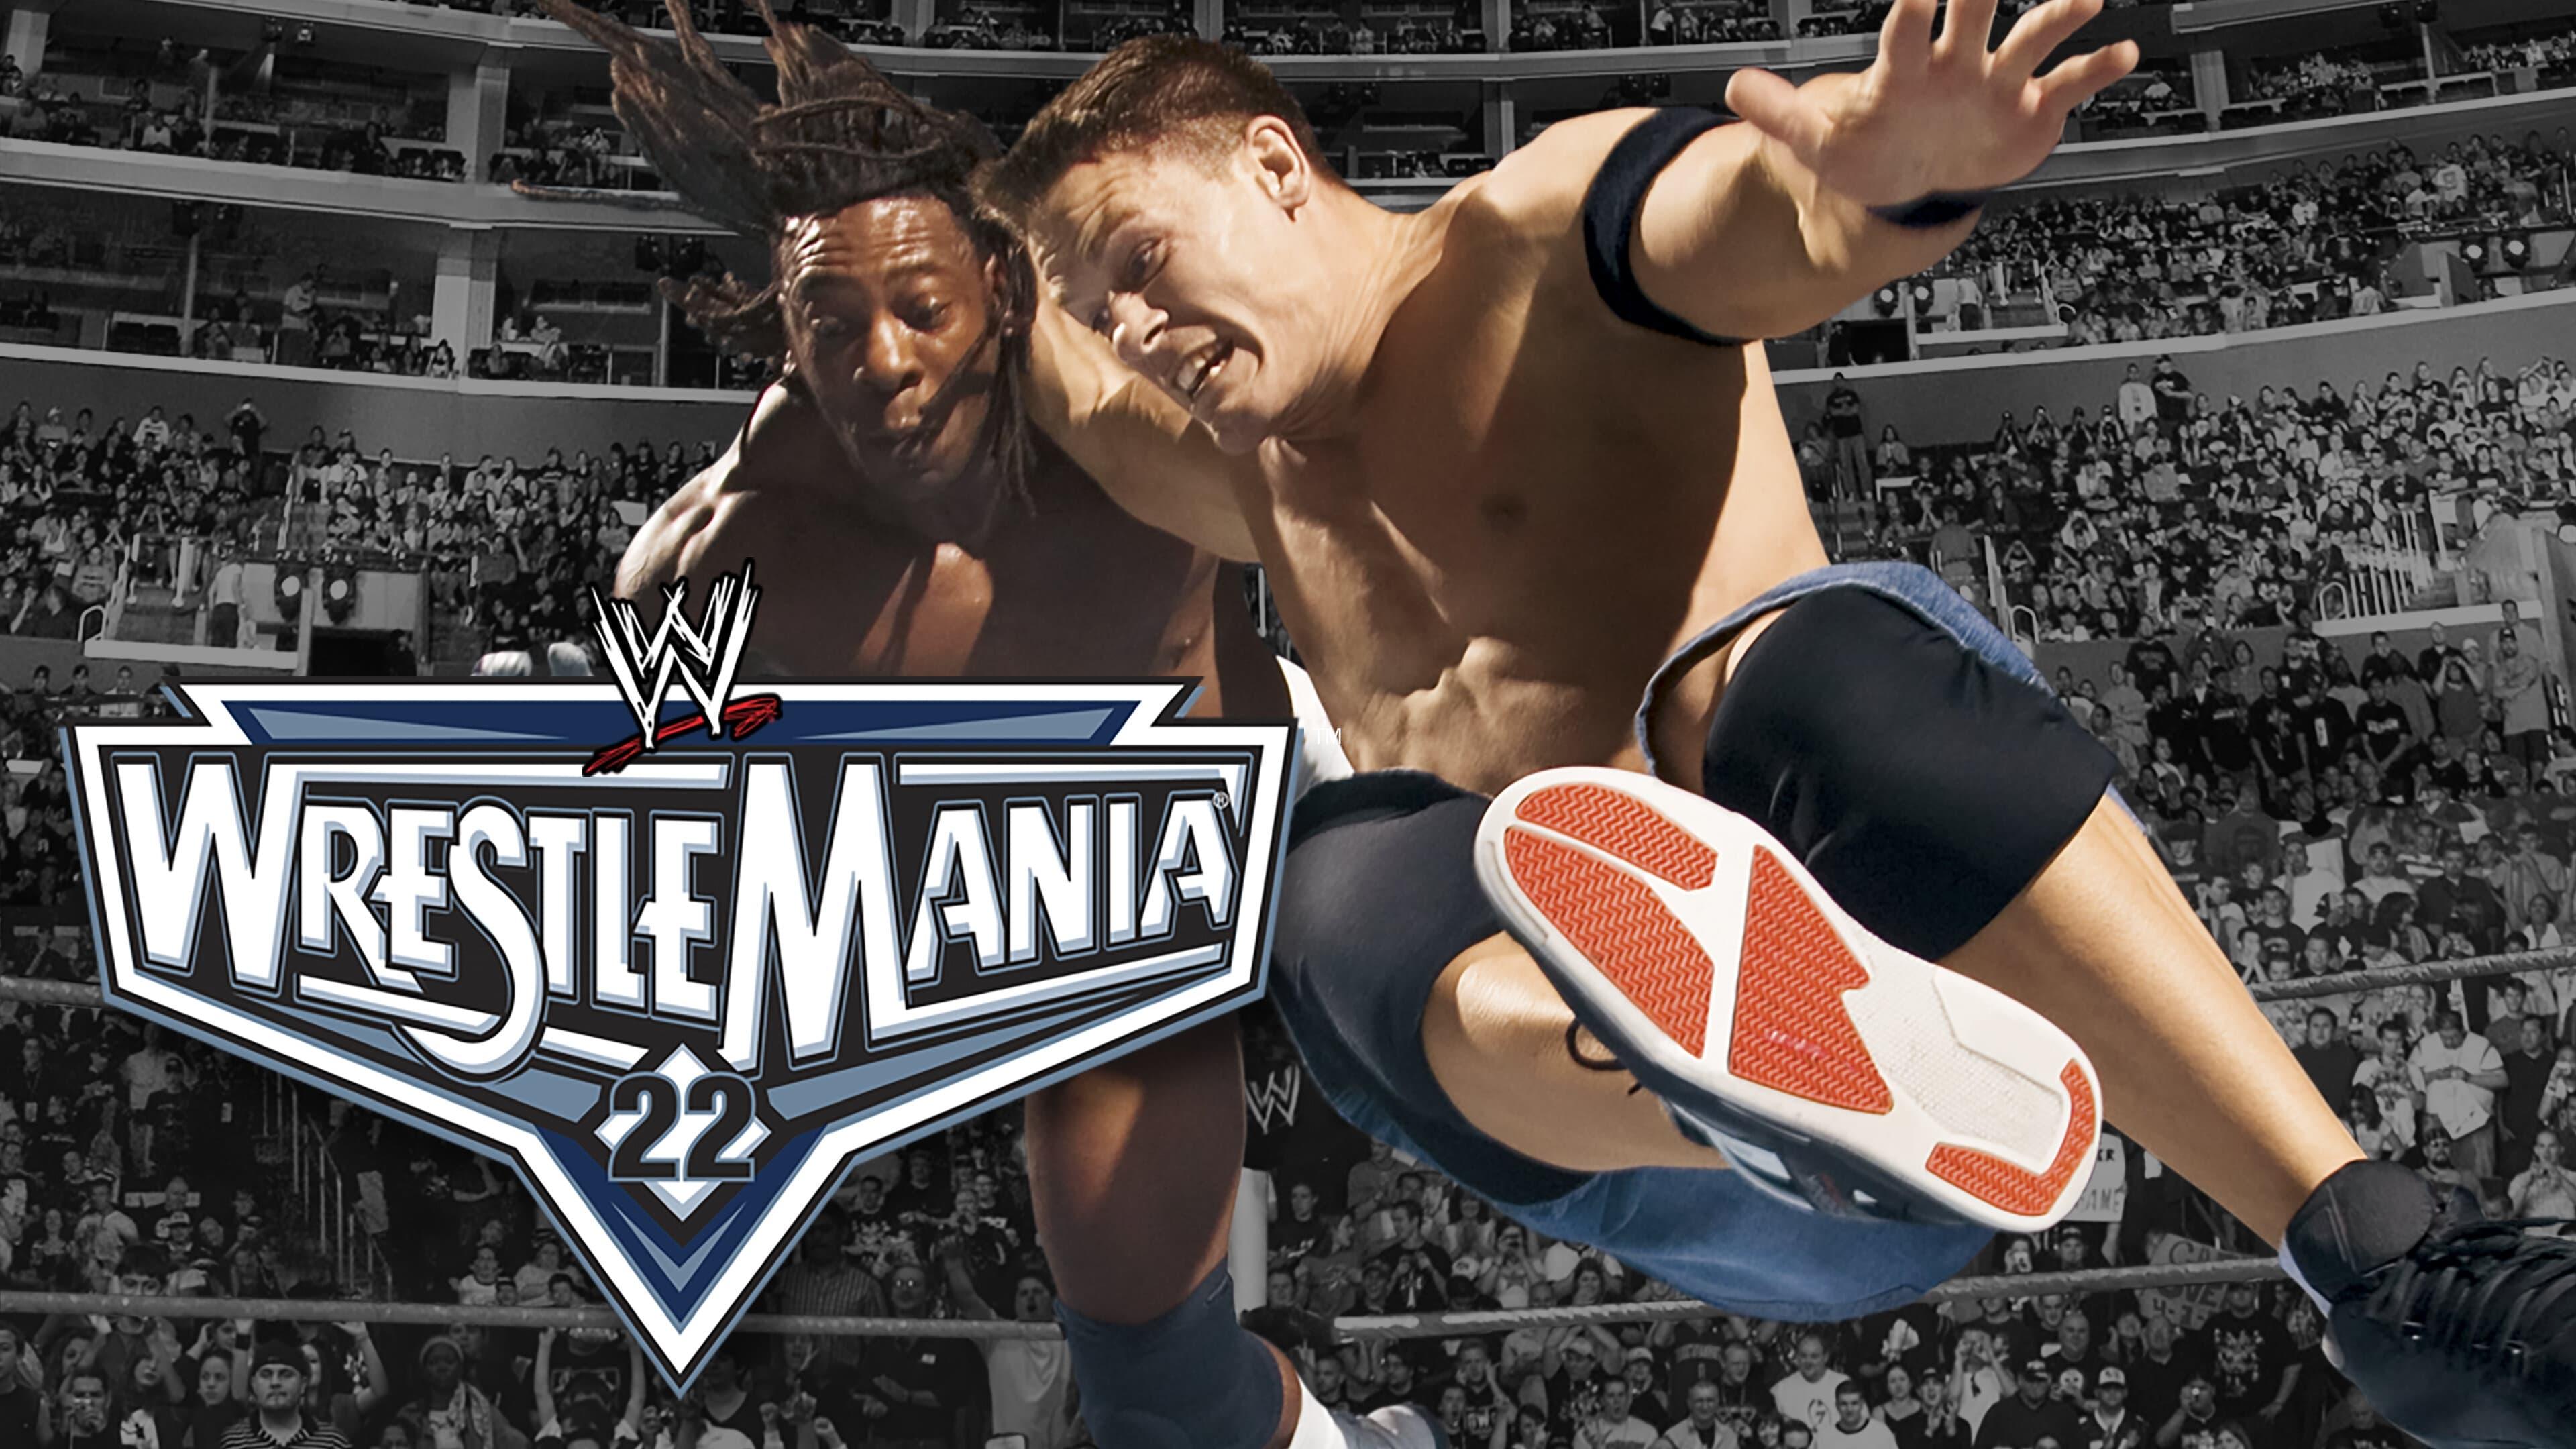 WWE WrestleMania 22 backdrop